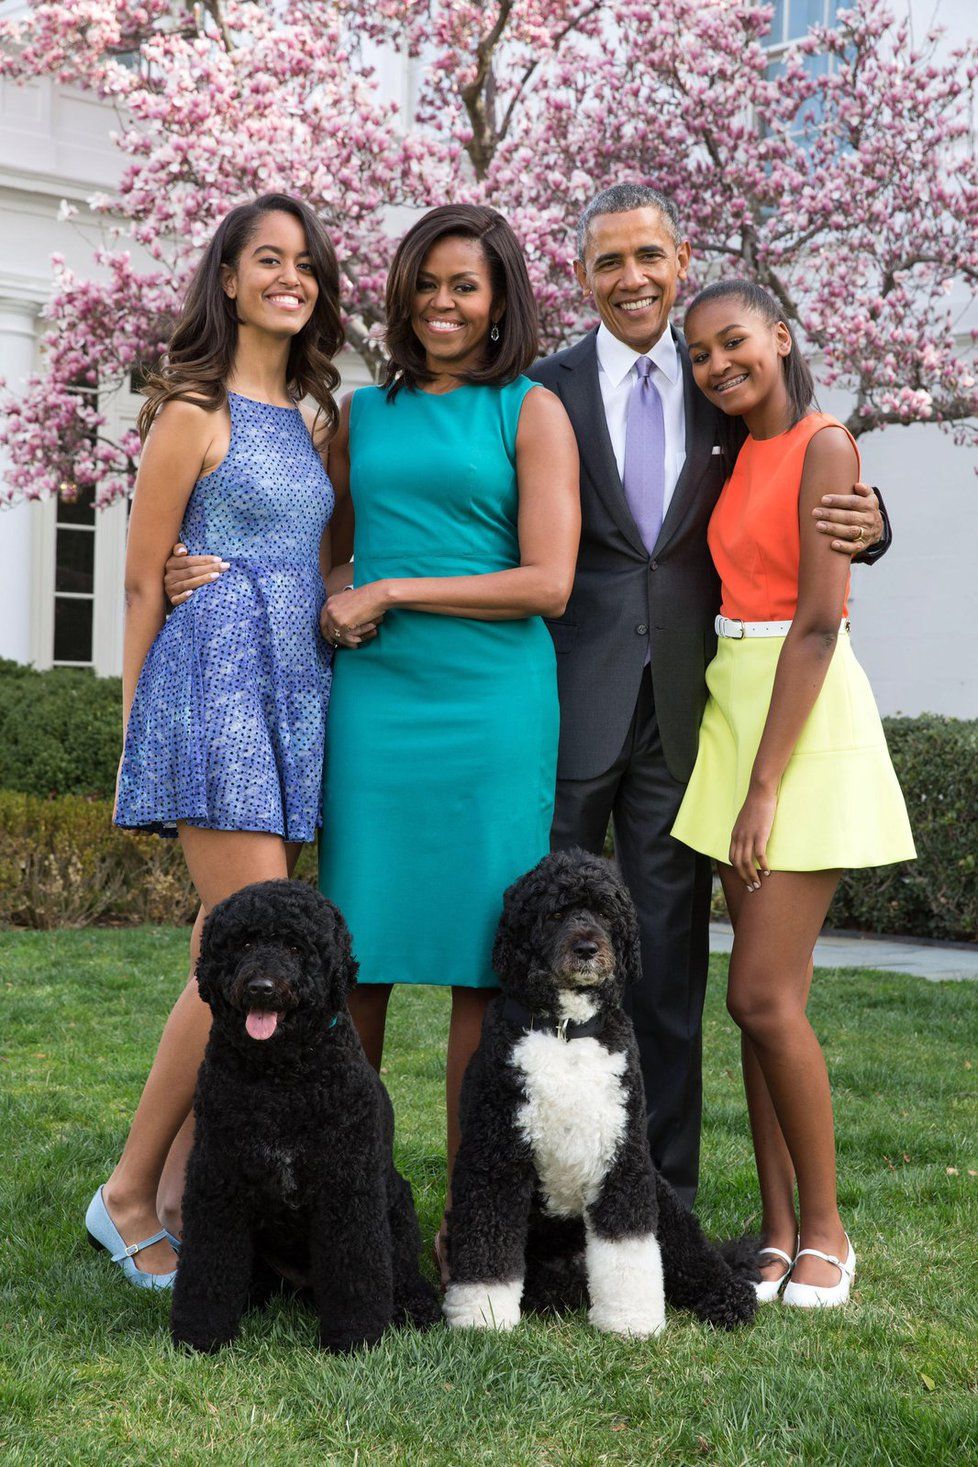 Rodina Obamových: (zleva) Malla, Michelle, Barrack a Sasha, dole pejsci Bo a Sunny